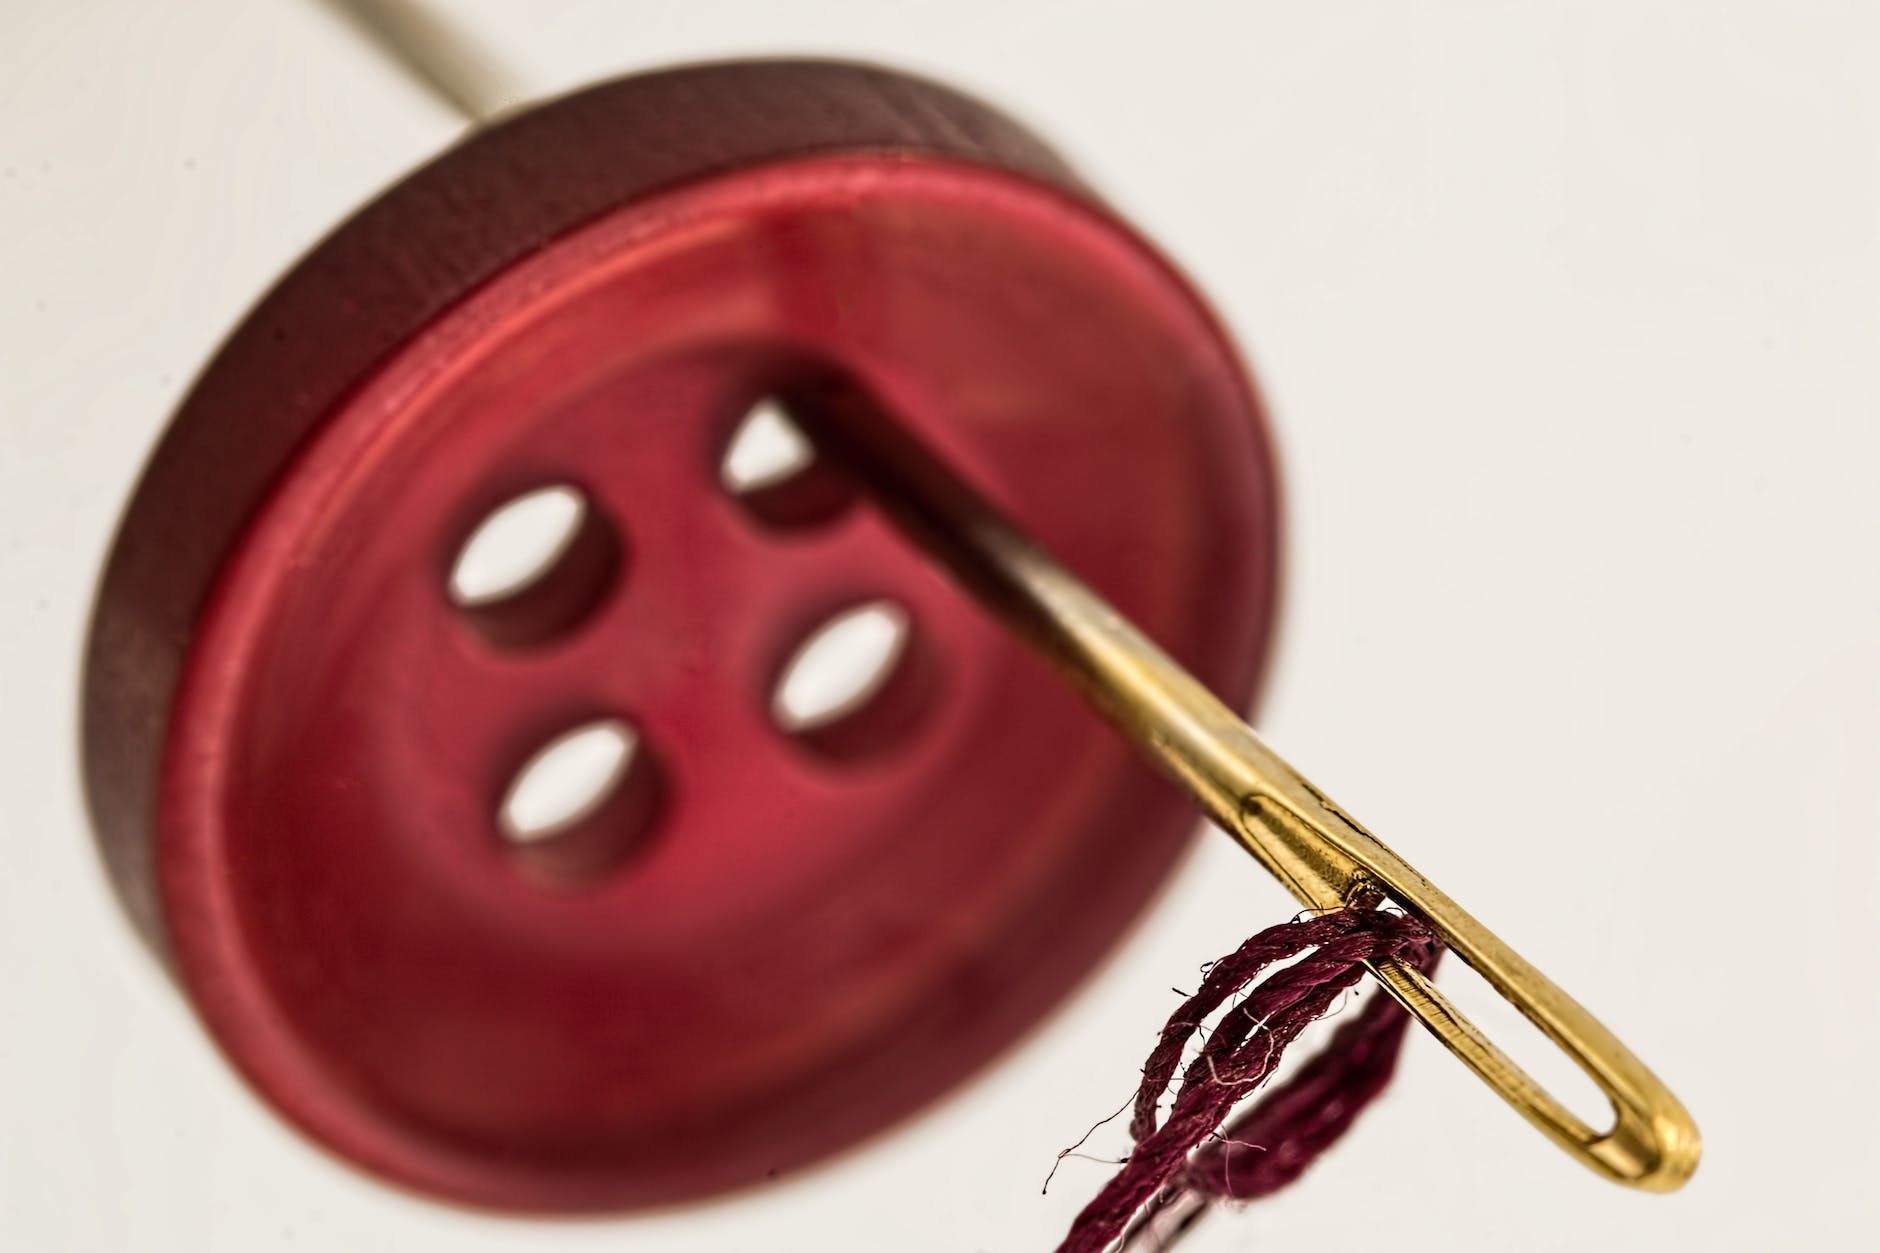 brass needle through red cloth button